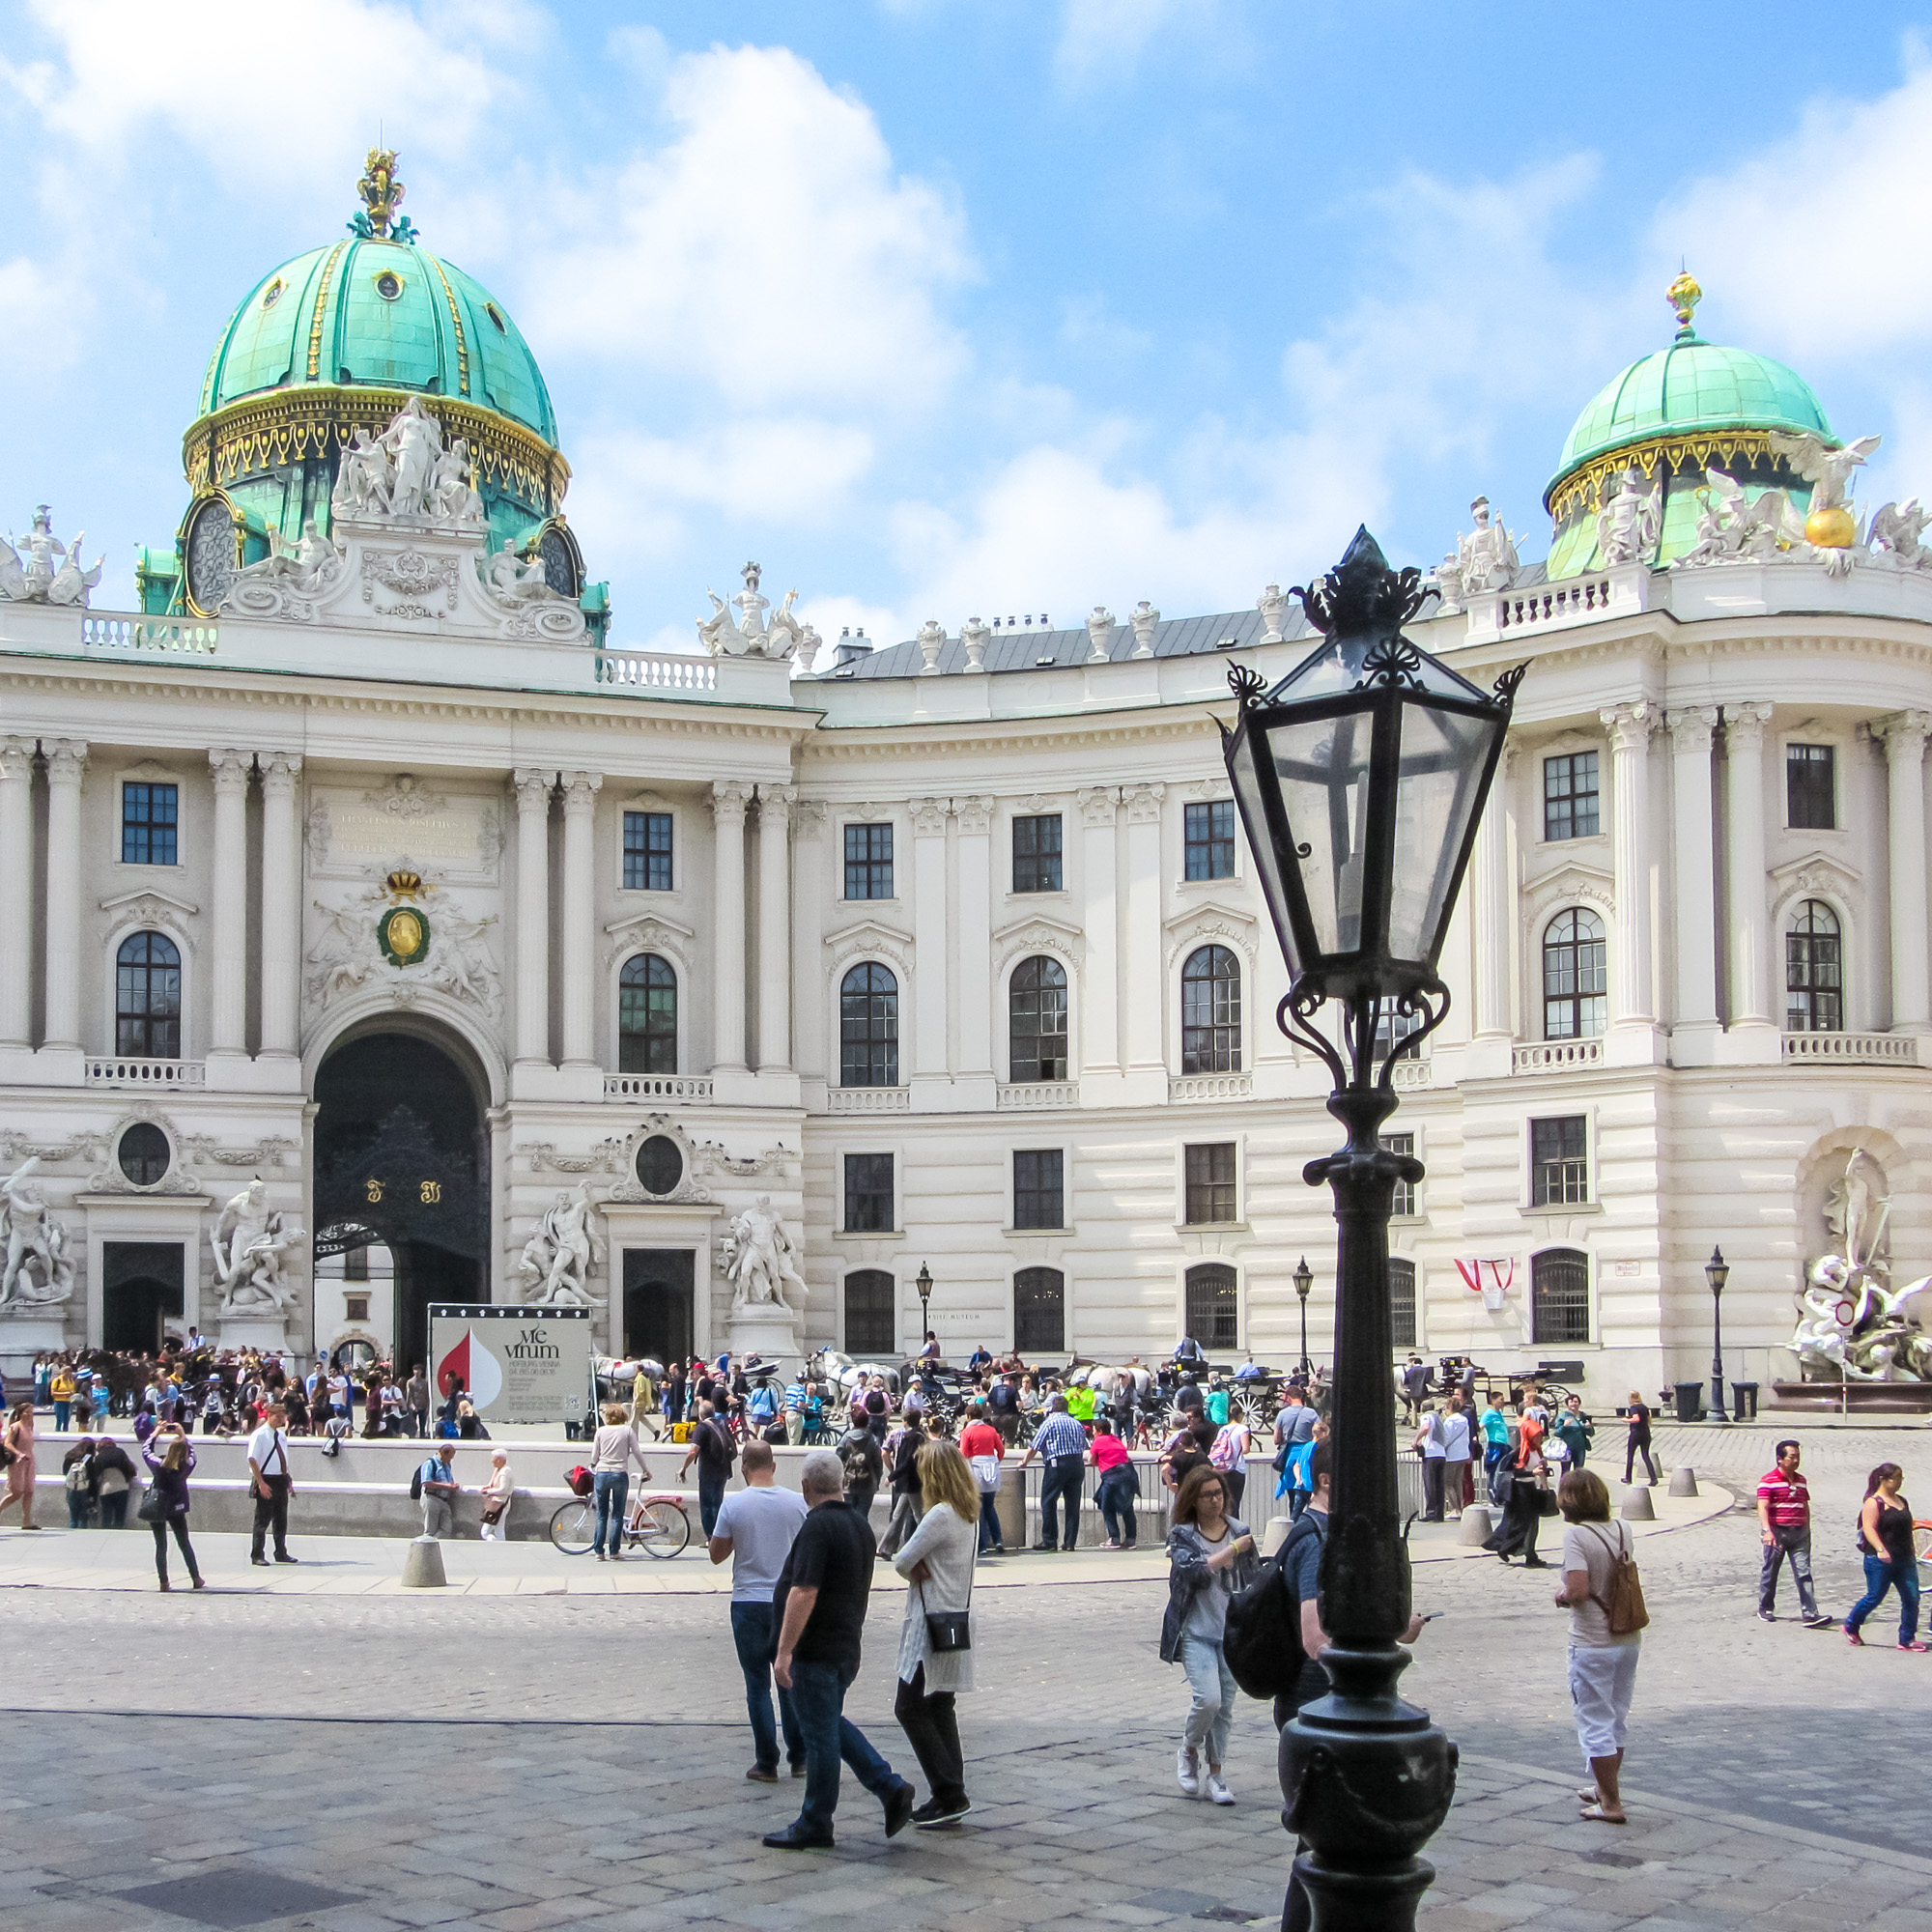 Vienna Palace